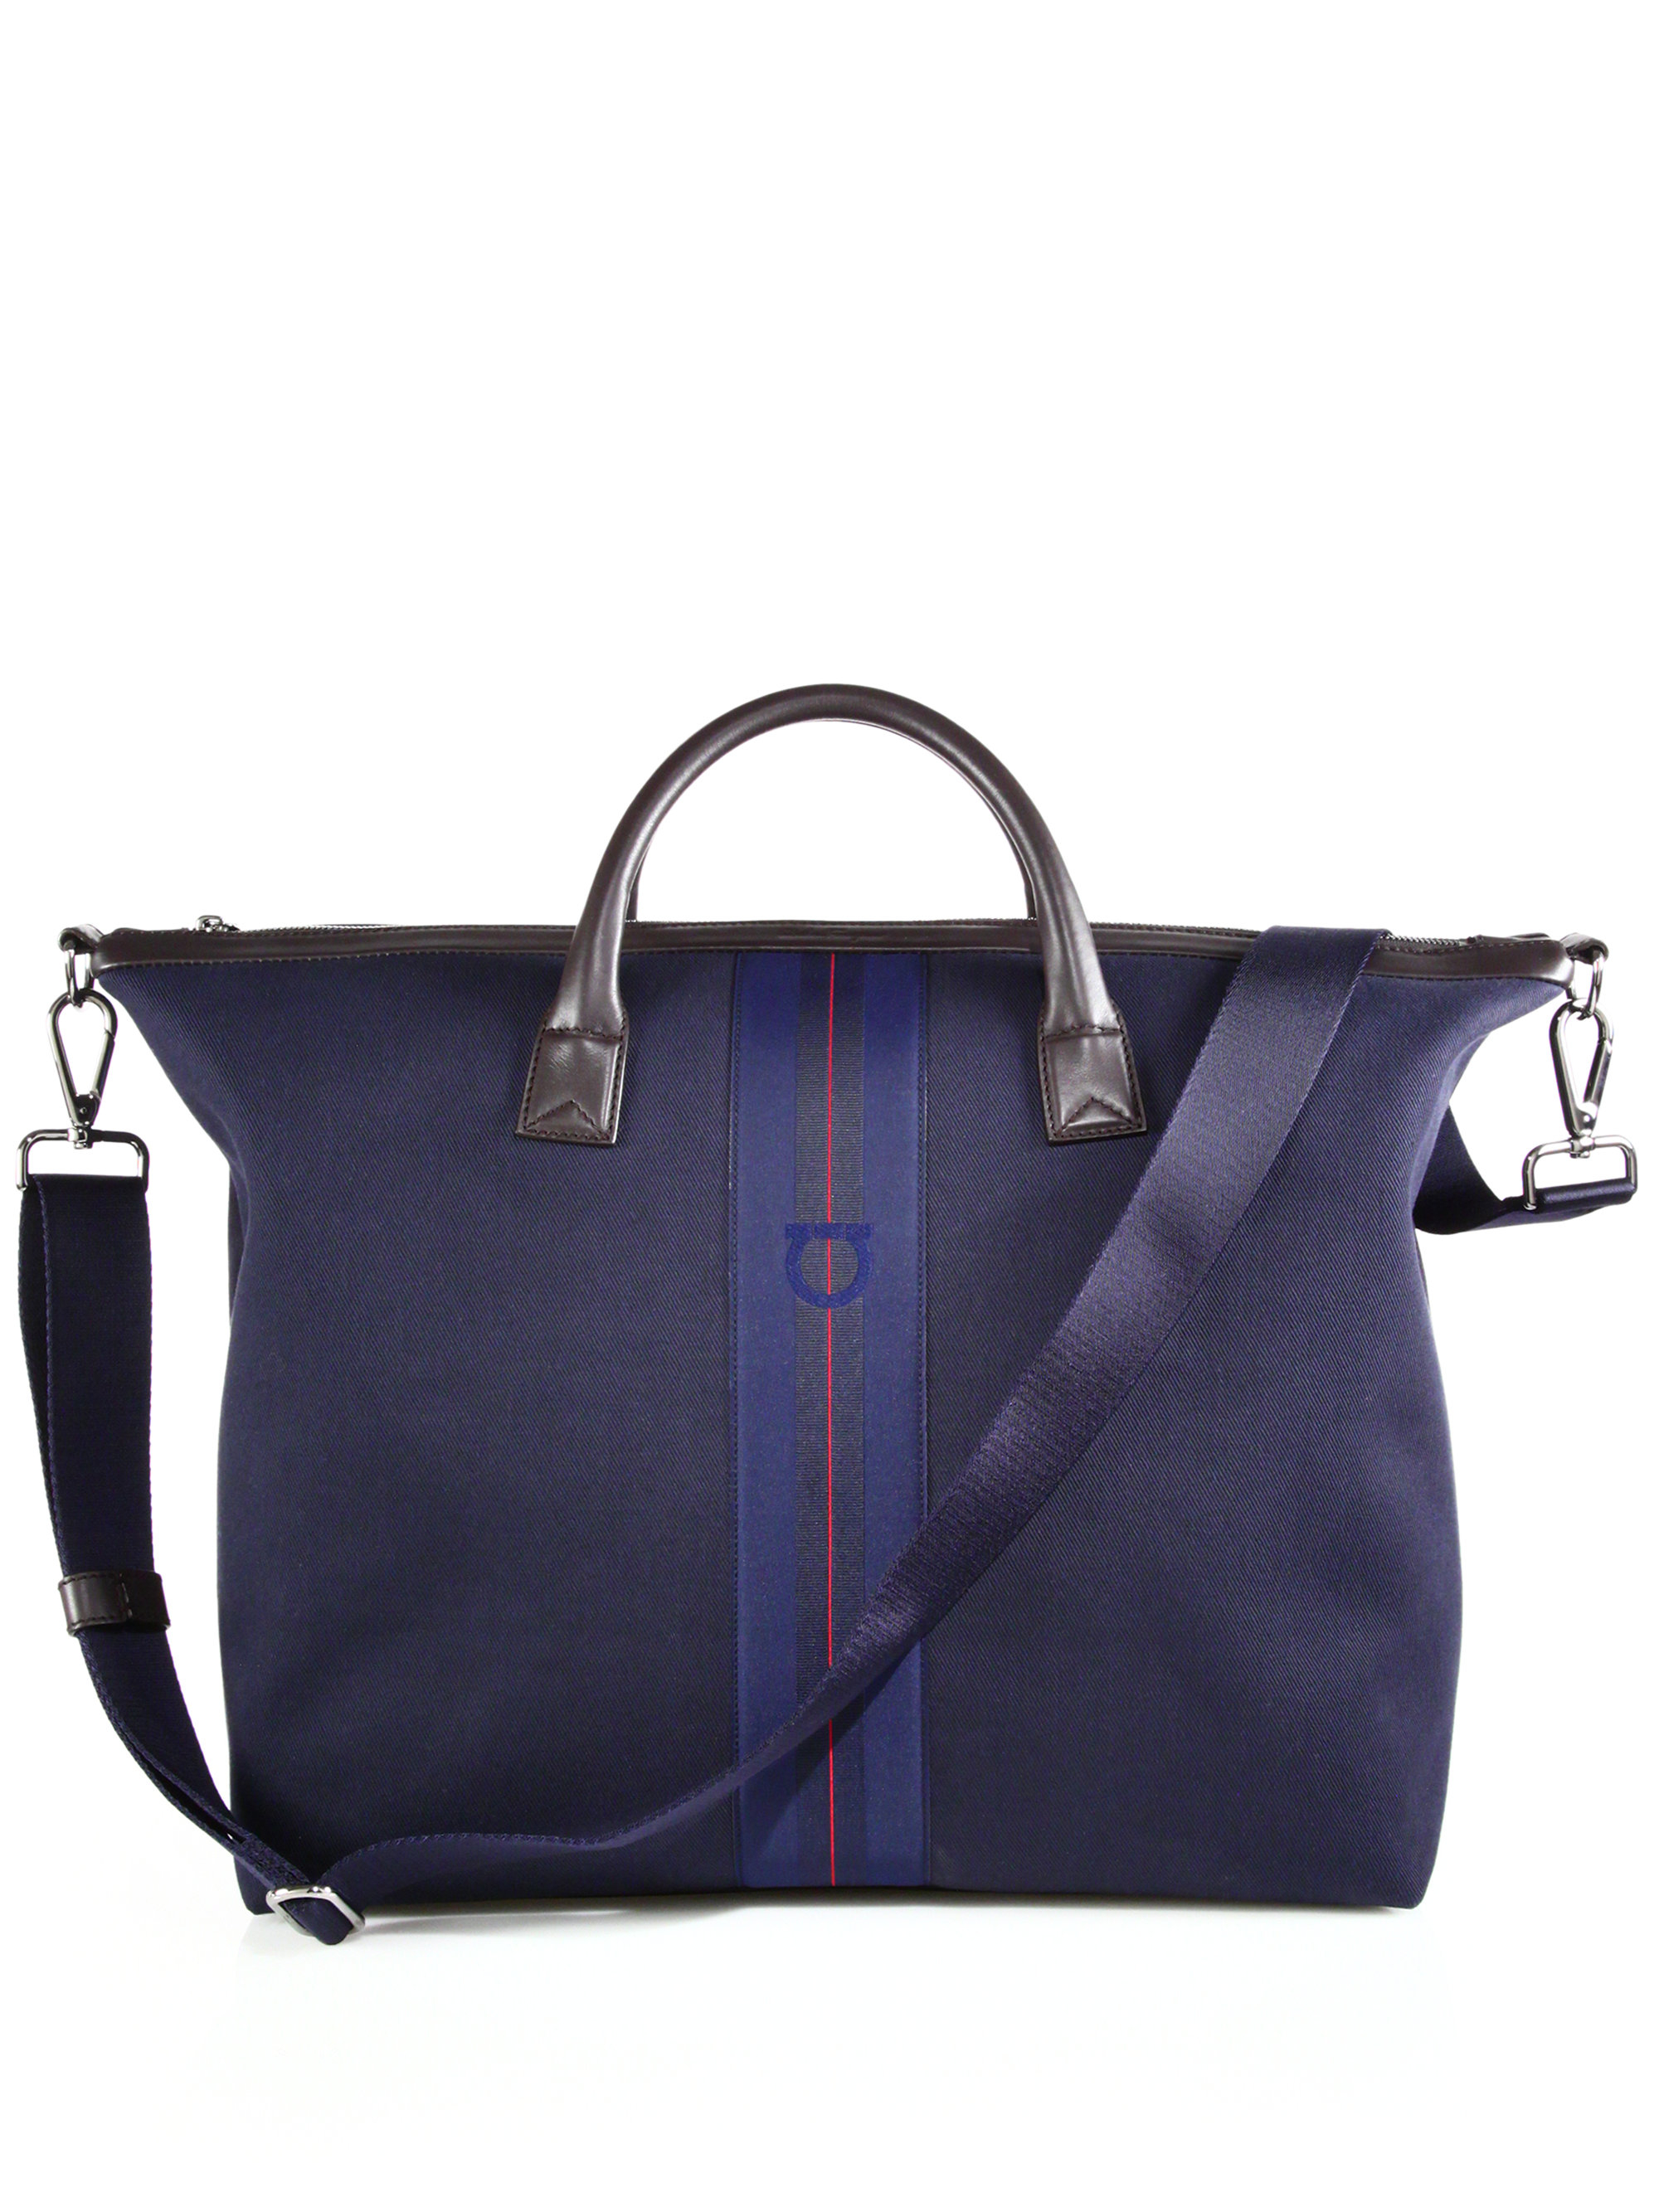 Lyst - Ferragamo Manderson Canvas & Leather Weekender Bag in Blue for Men